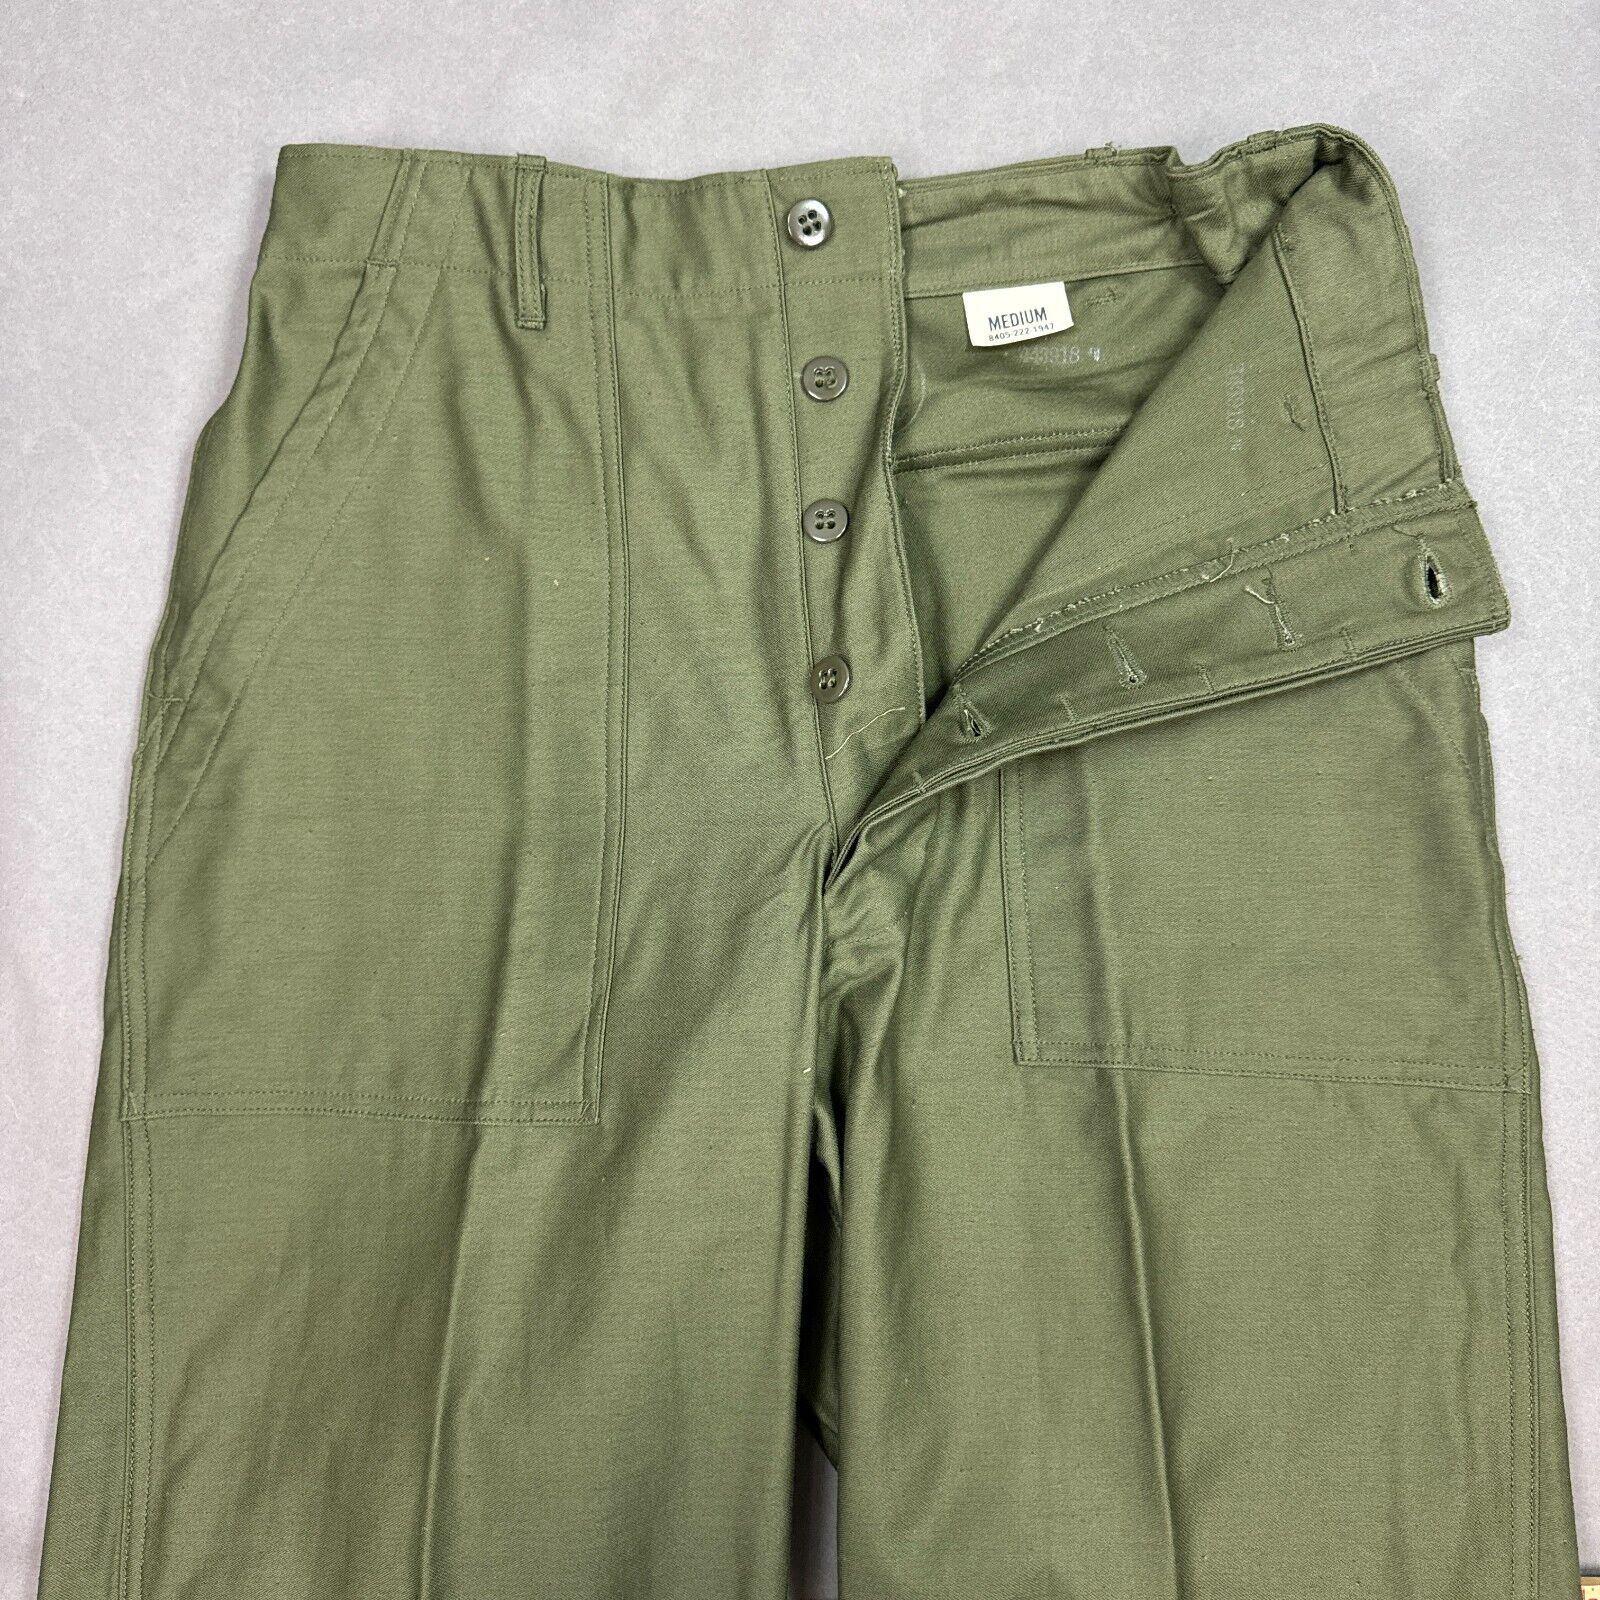 Vintage US Military Pants Mens Medium Green Trousers Utility Vietnam War OG 107